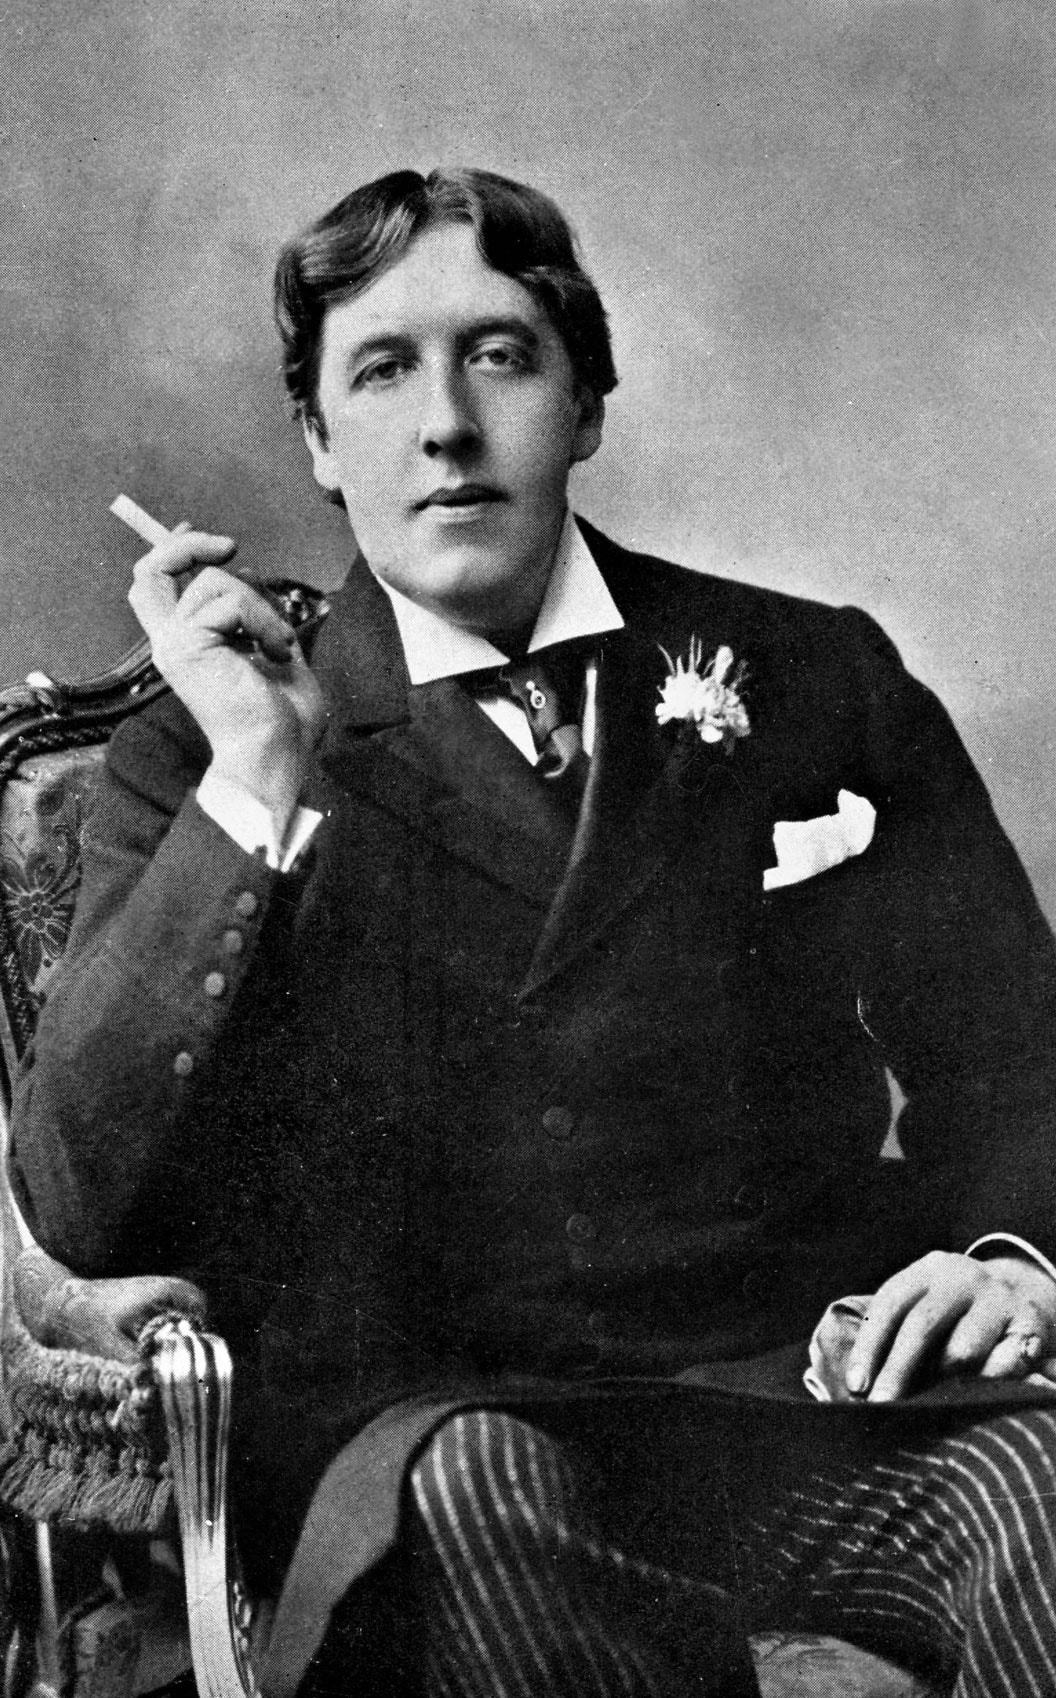 Oscar Wilde photograph, one of the finest Irish authors